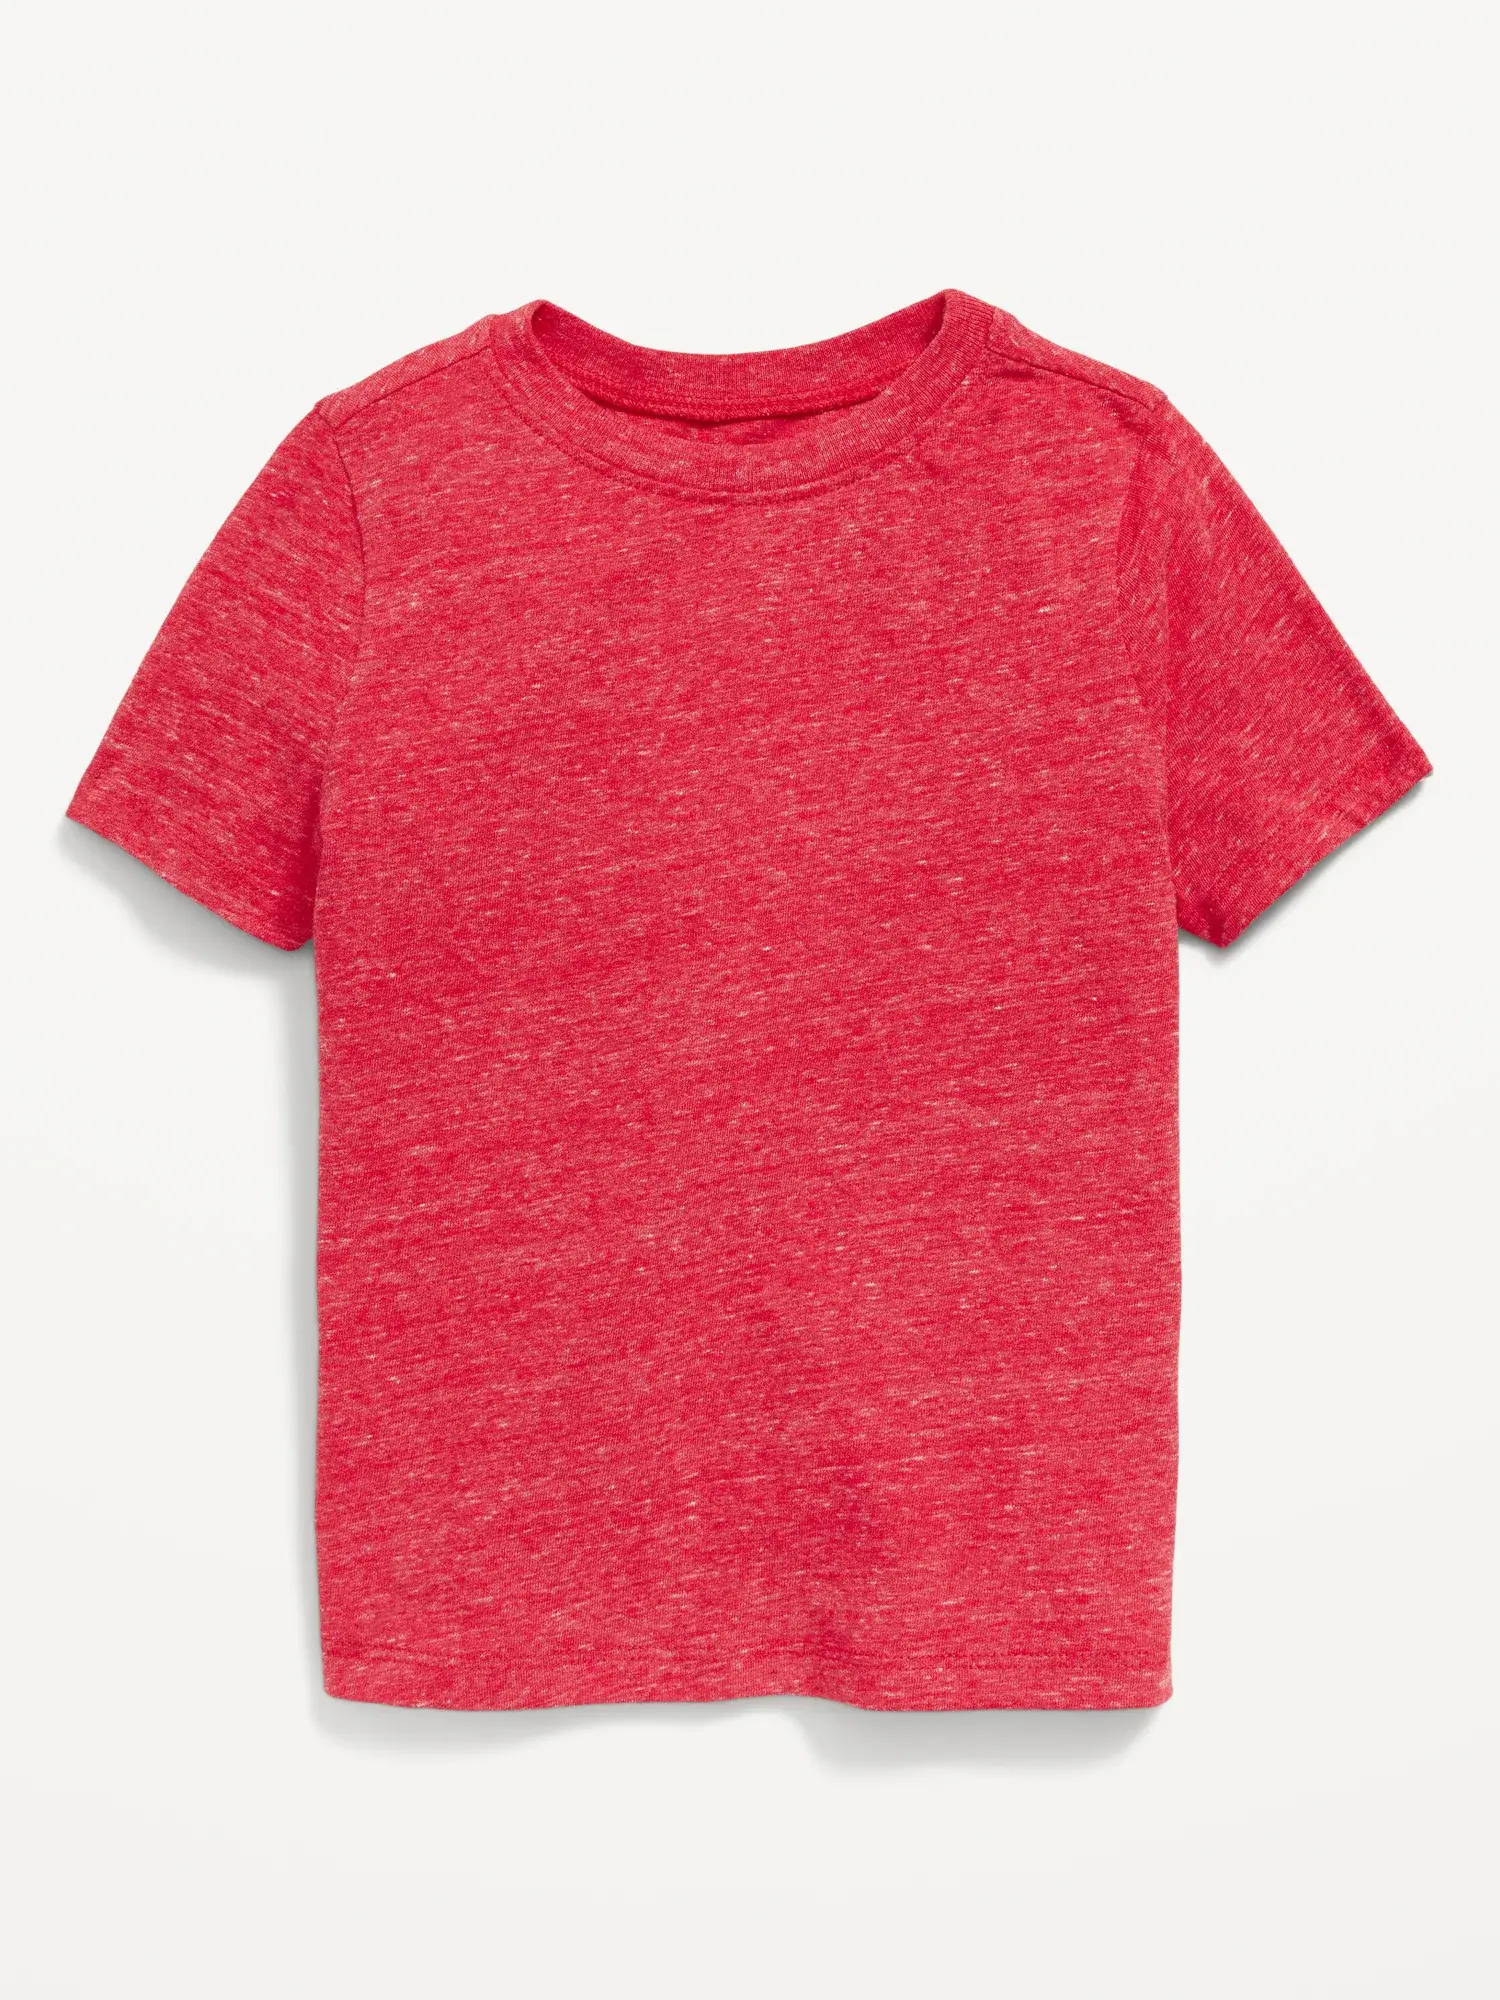 Old Navy Unisex Short-Sleeve Slub-Knit T-Shirt for Toddler red. 1